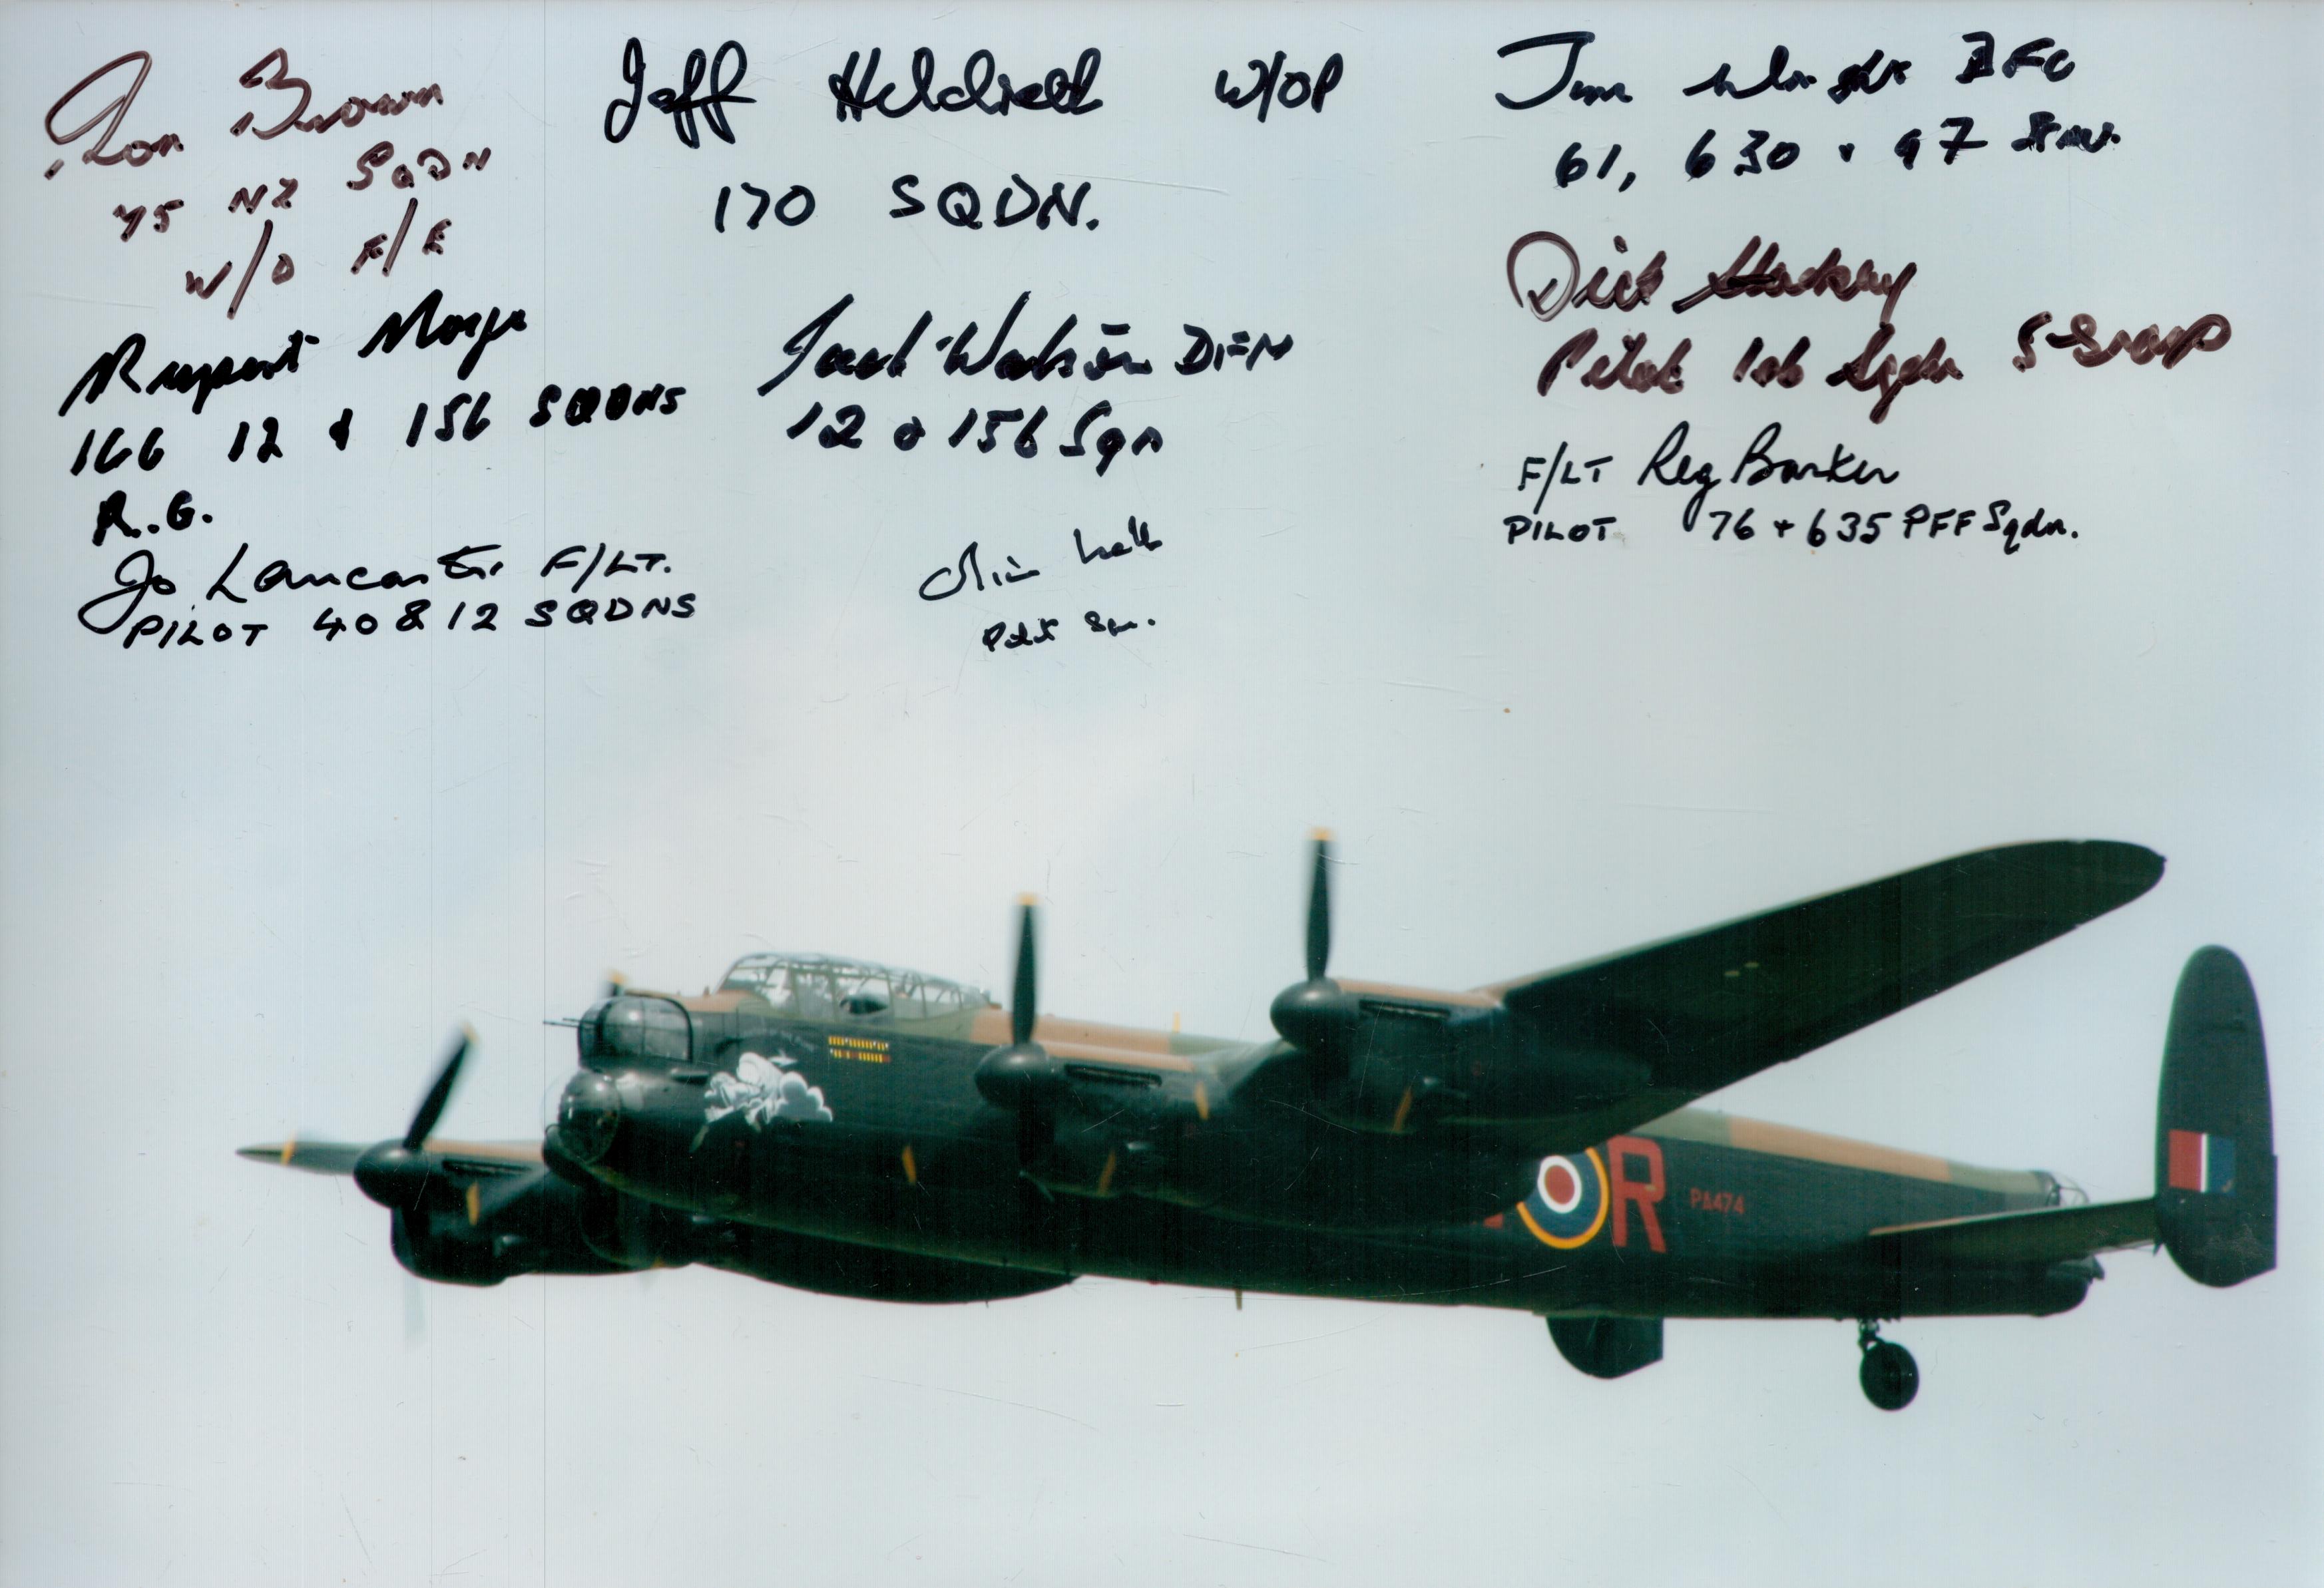 Nine WW2 RAF Lancaster bomber veterans multiple signed Lanc in flight 12 x 8 inch colour photo.